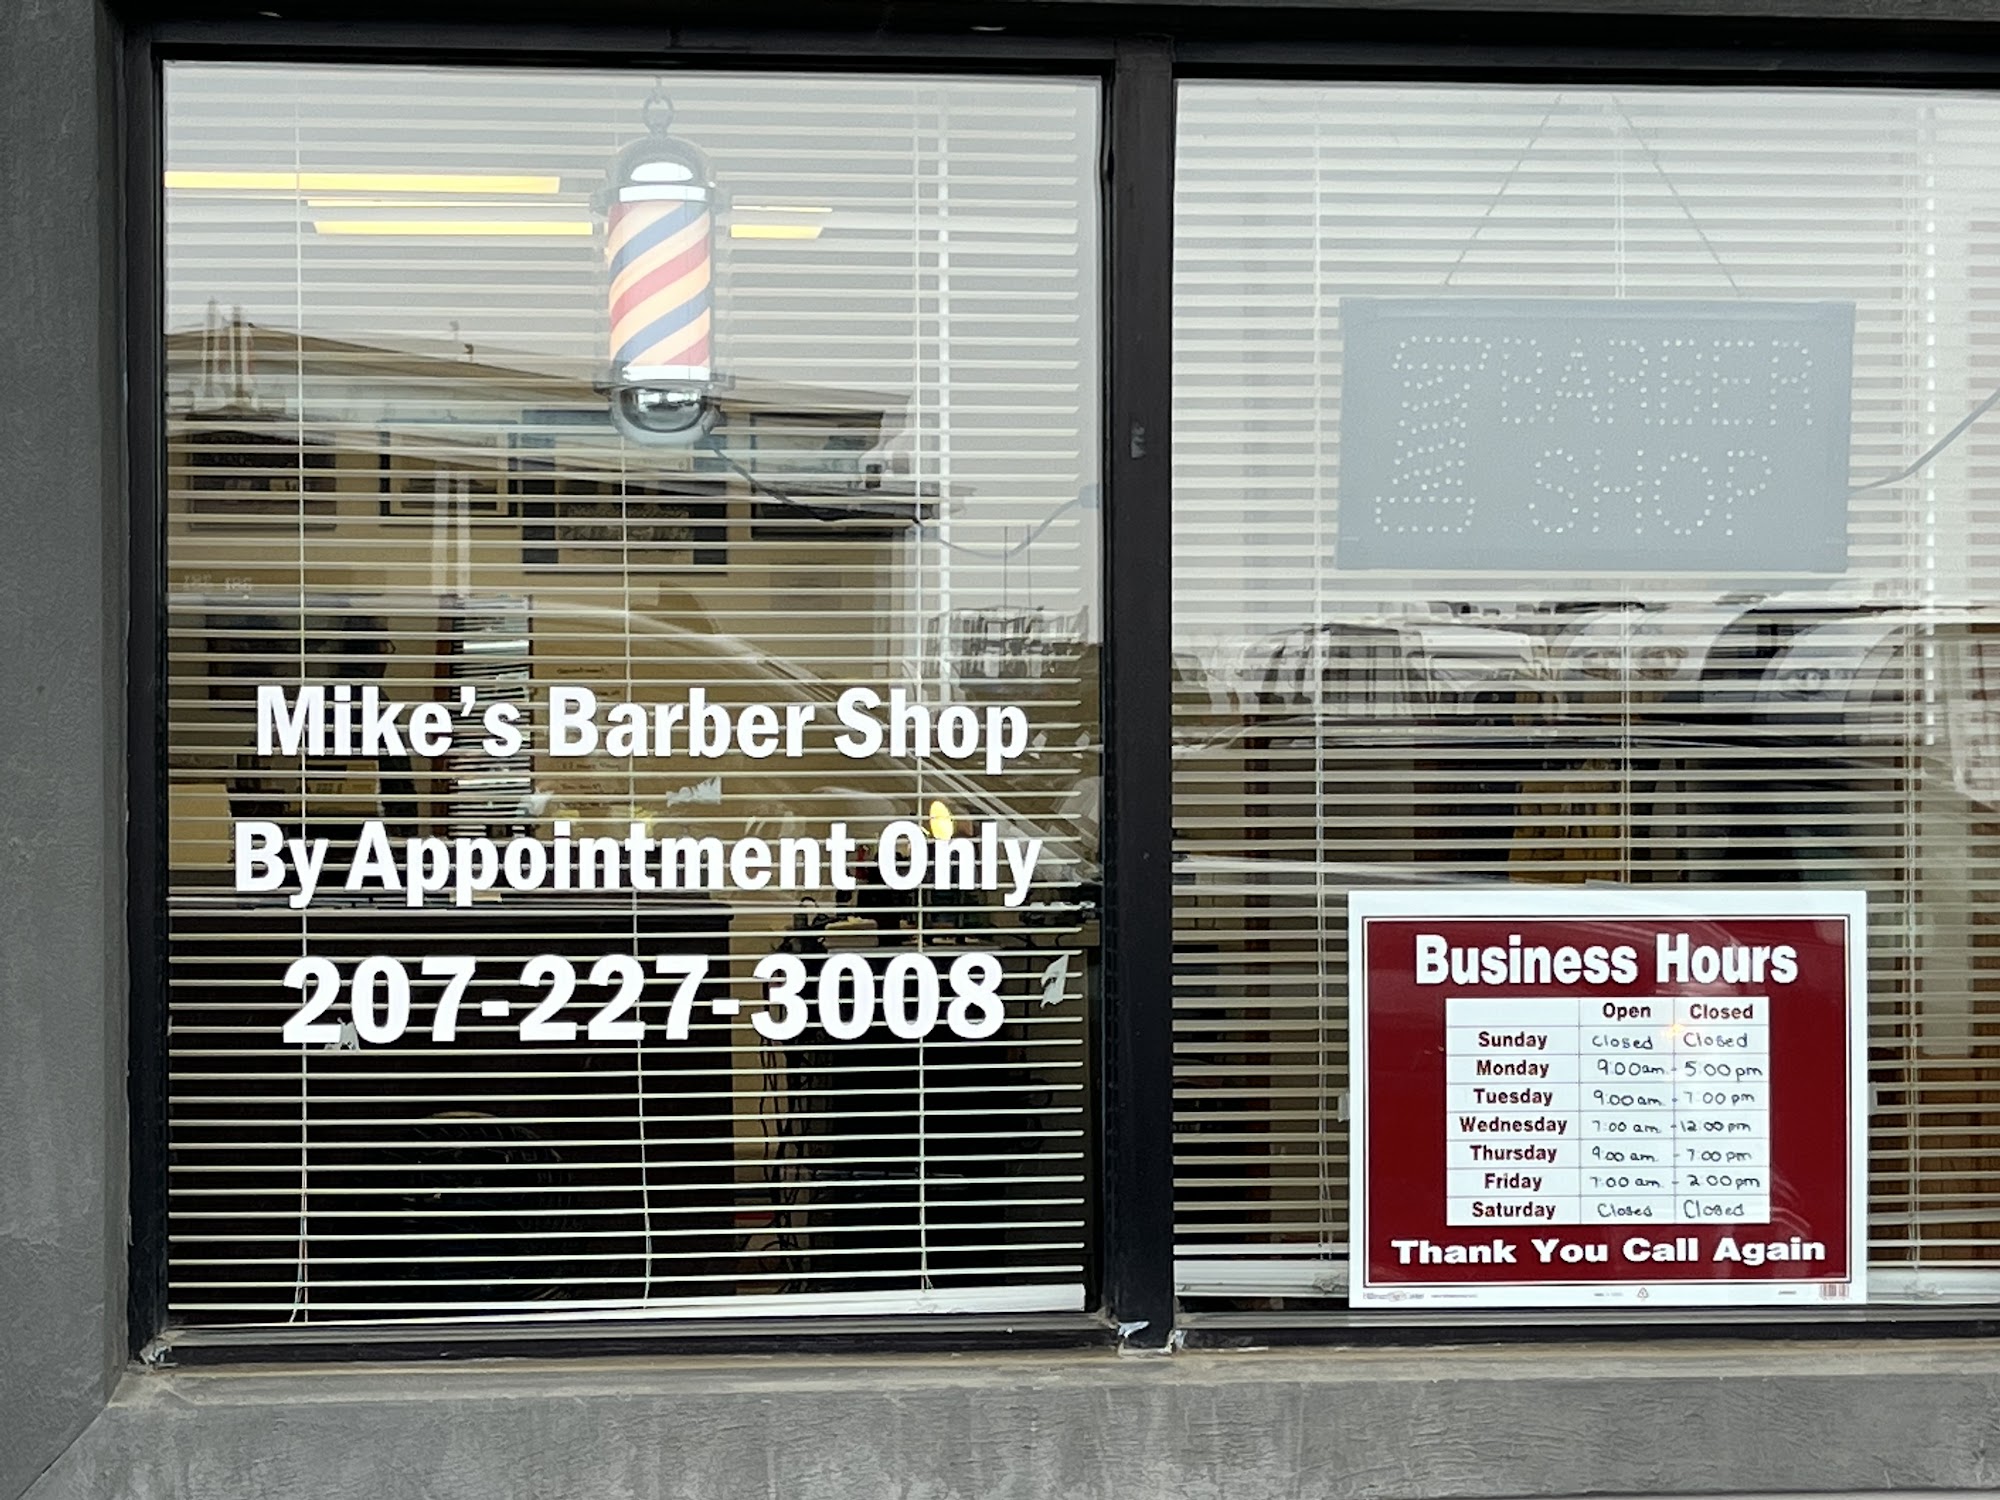 Mike's Barbershop 382 North St, Houlton Maine 04730